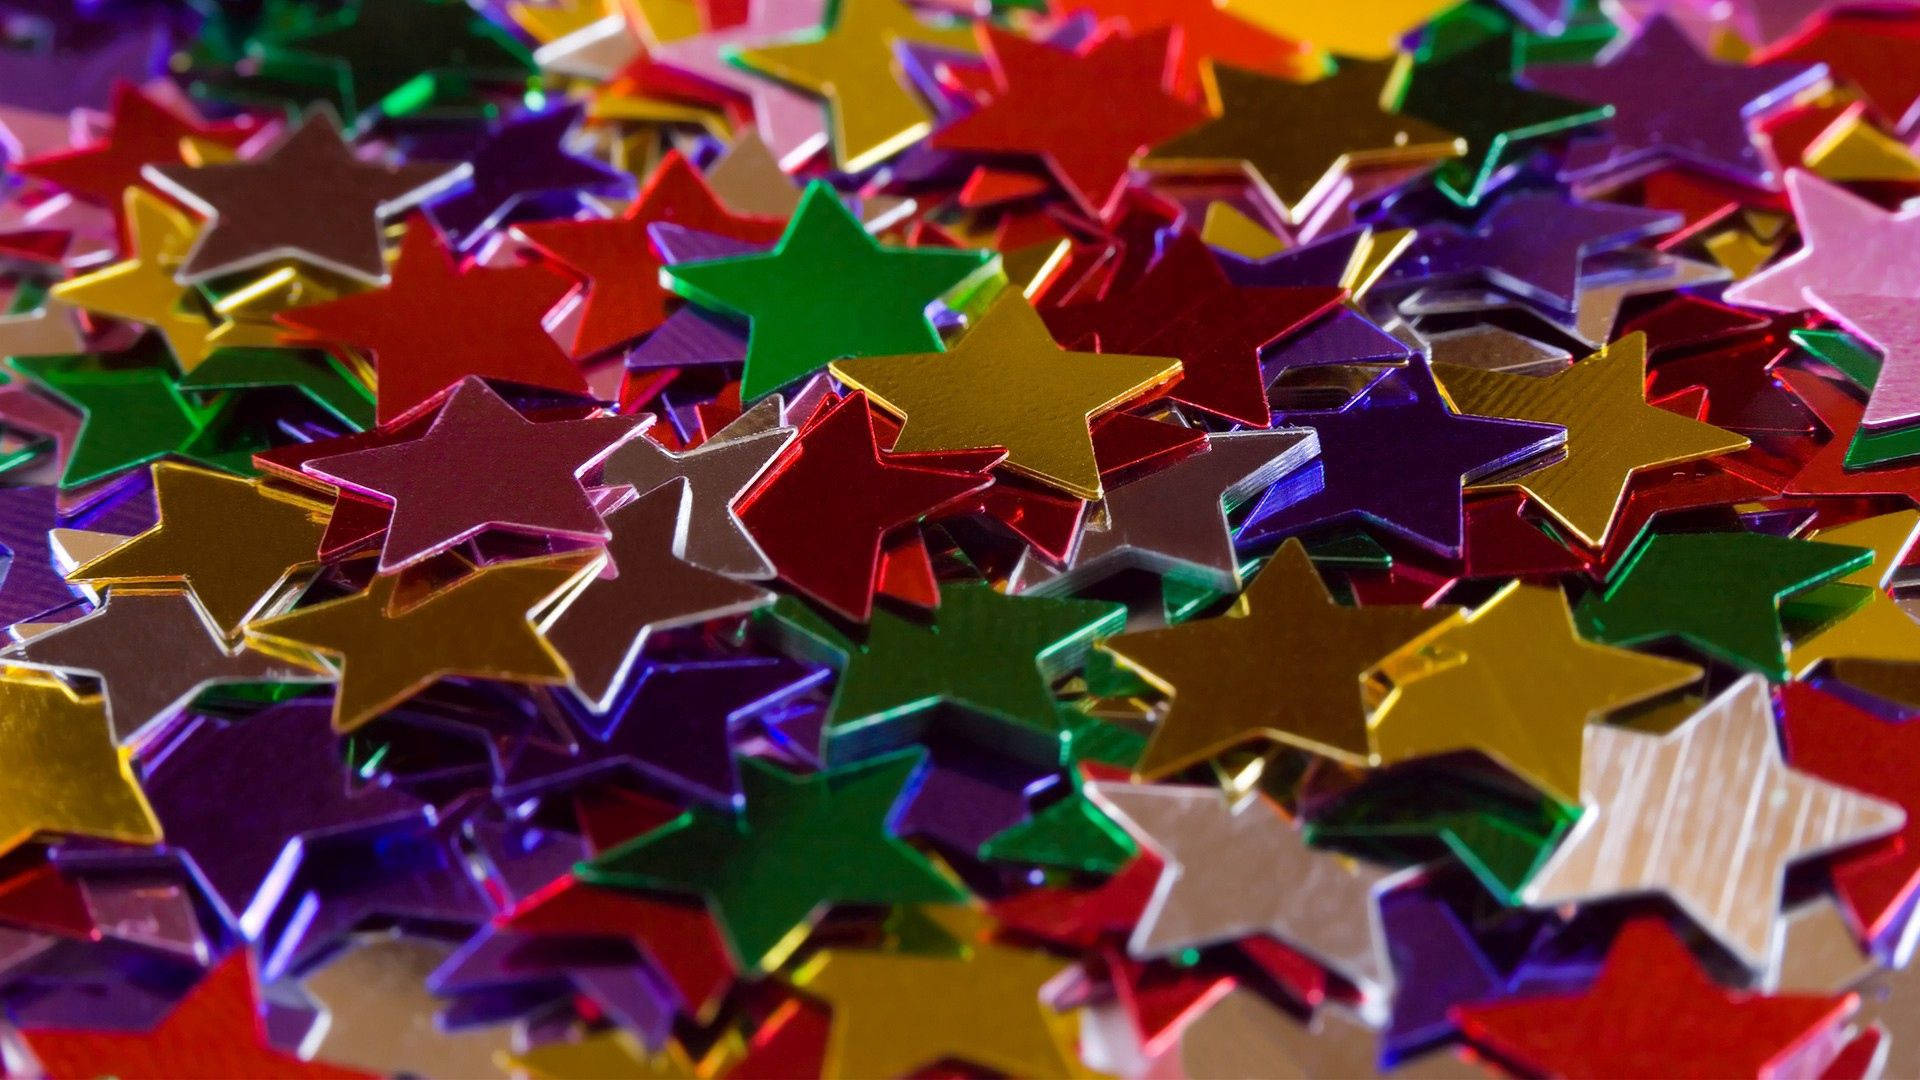 A Pile Of Colorful Star Confetti